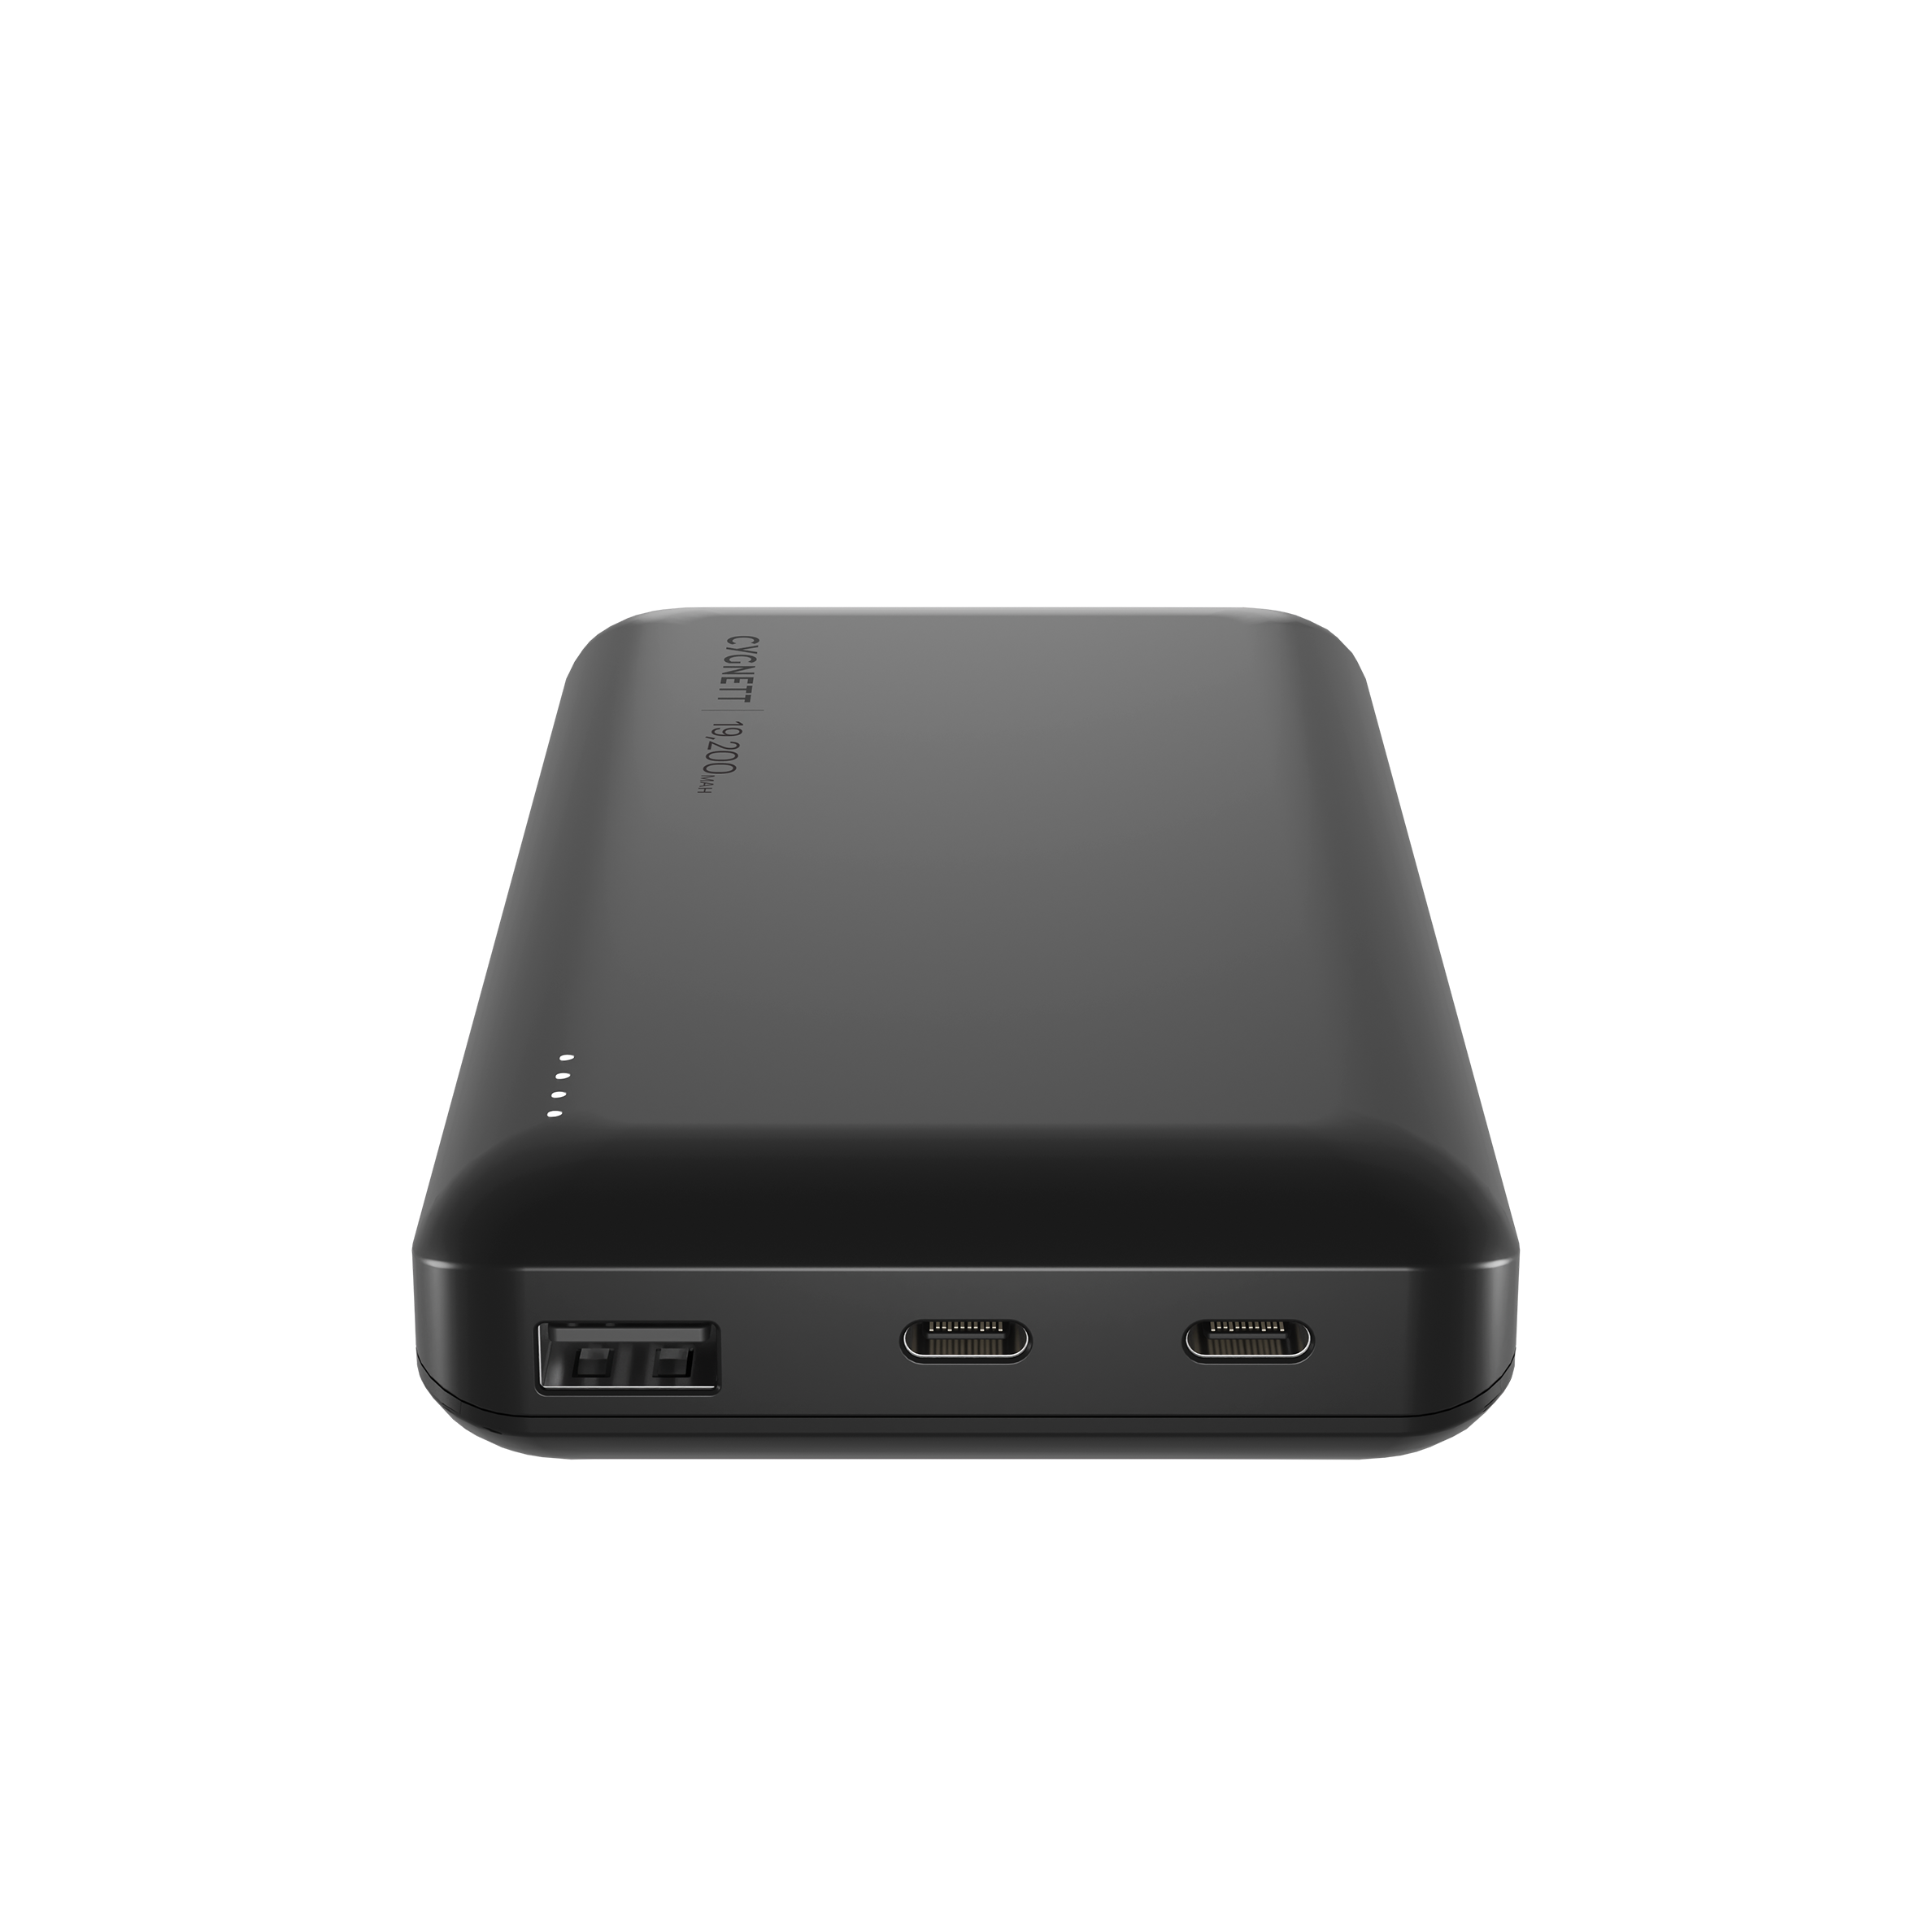 19,200 mAh 118W USB-C Laptop Power Bank - Cygnett (AU)